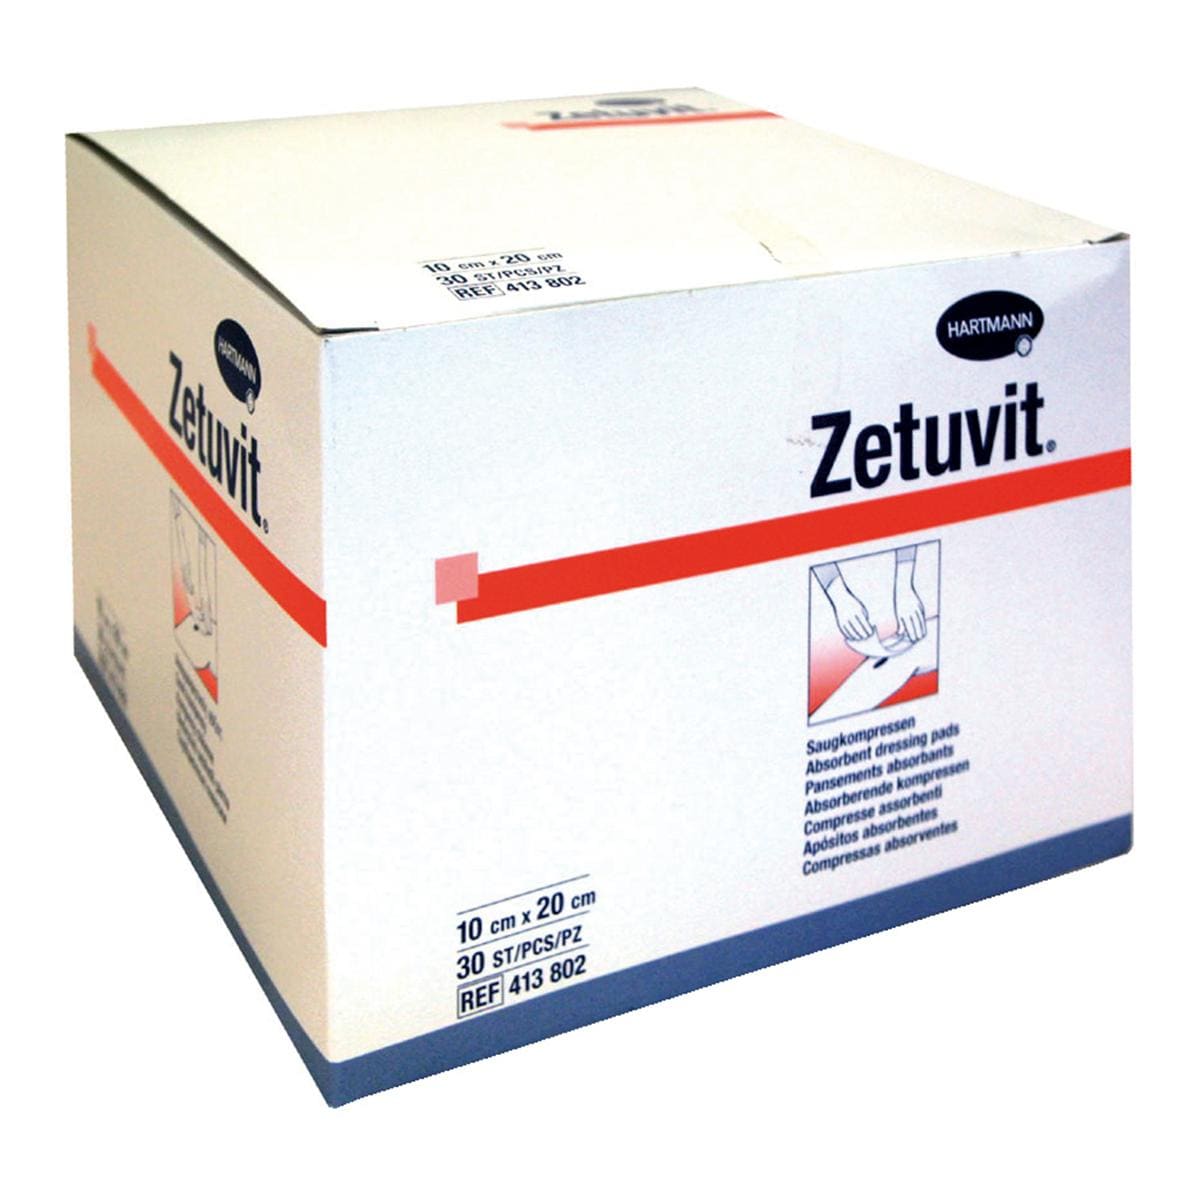 Zetuvit absorberend kompres - 10 x 20cm,30 stuks, niet steriel Henry Schein Medical